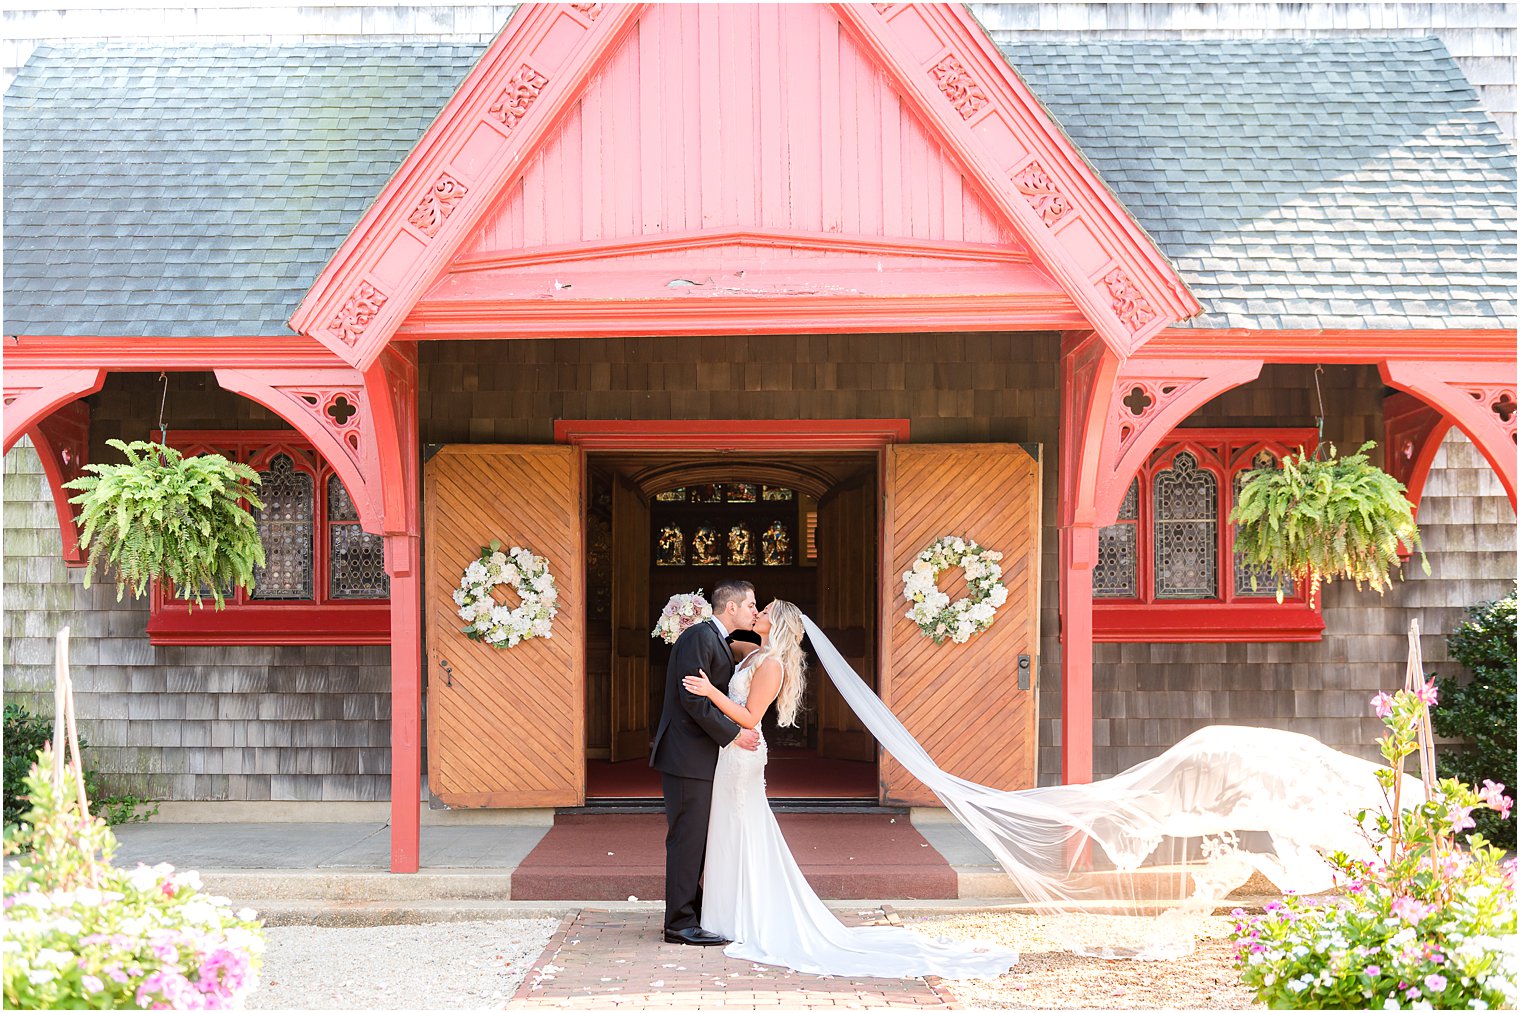 newlyweds kiss under red awning at NJ church